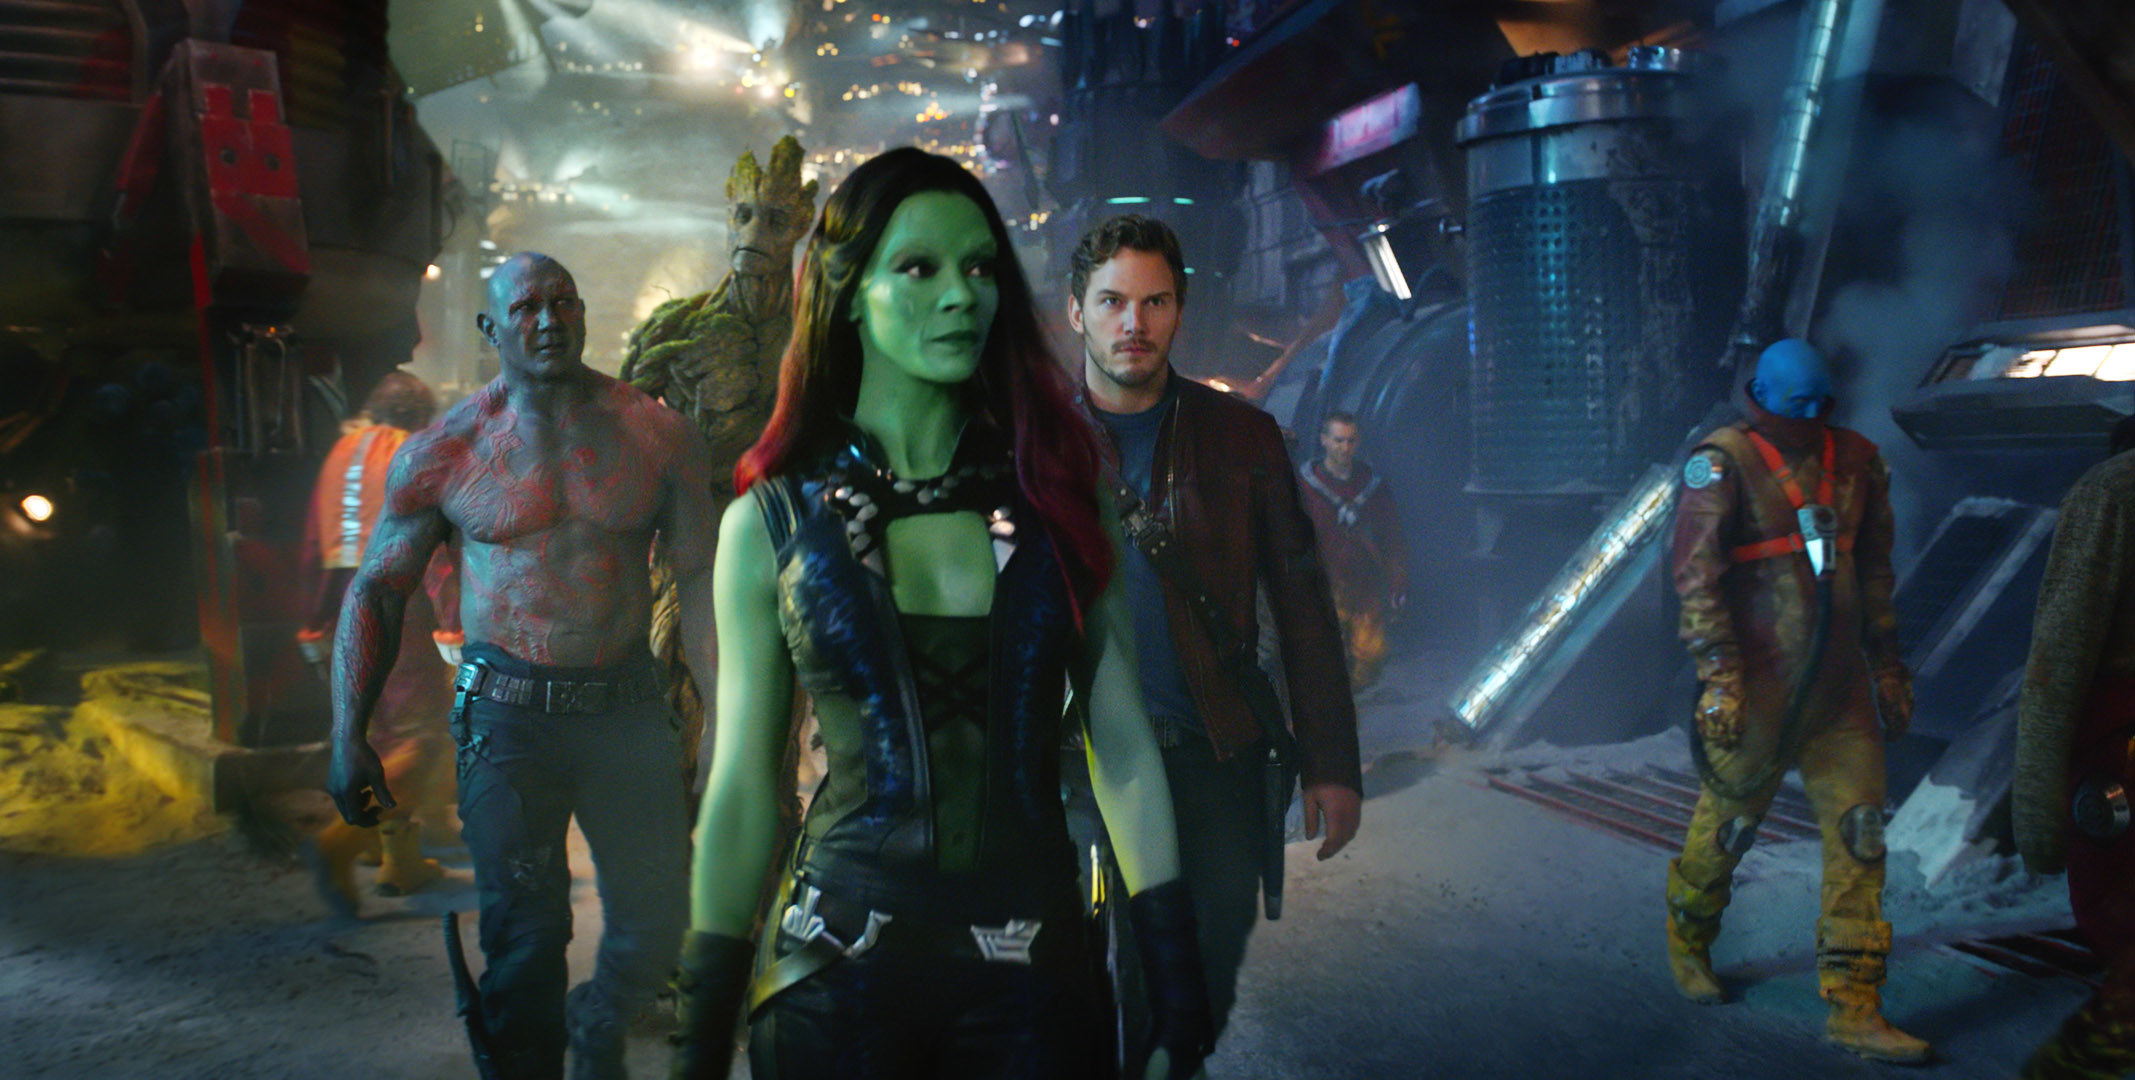 Dave Bautista, Groot (voice: Vin Diesel), Zoe Saldana, Chris Pratt as the Guardians, walking